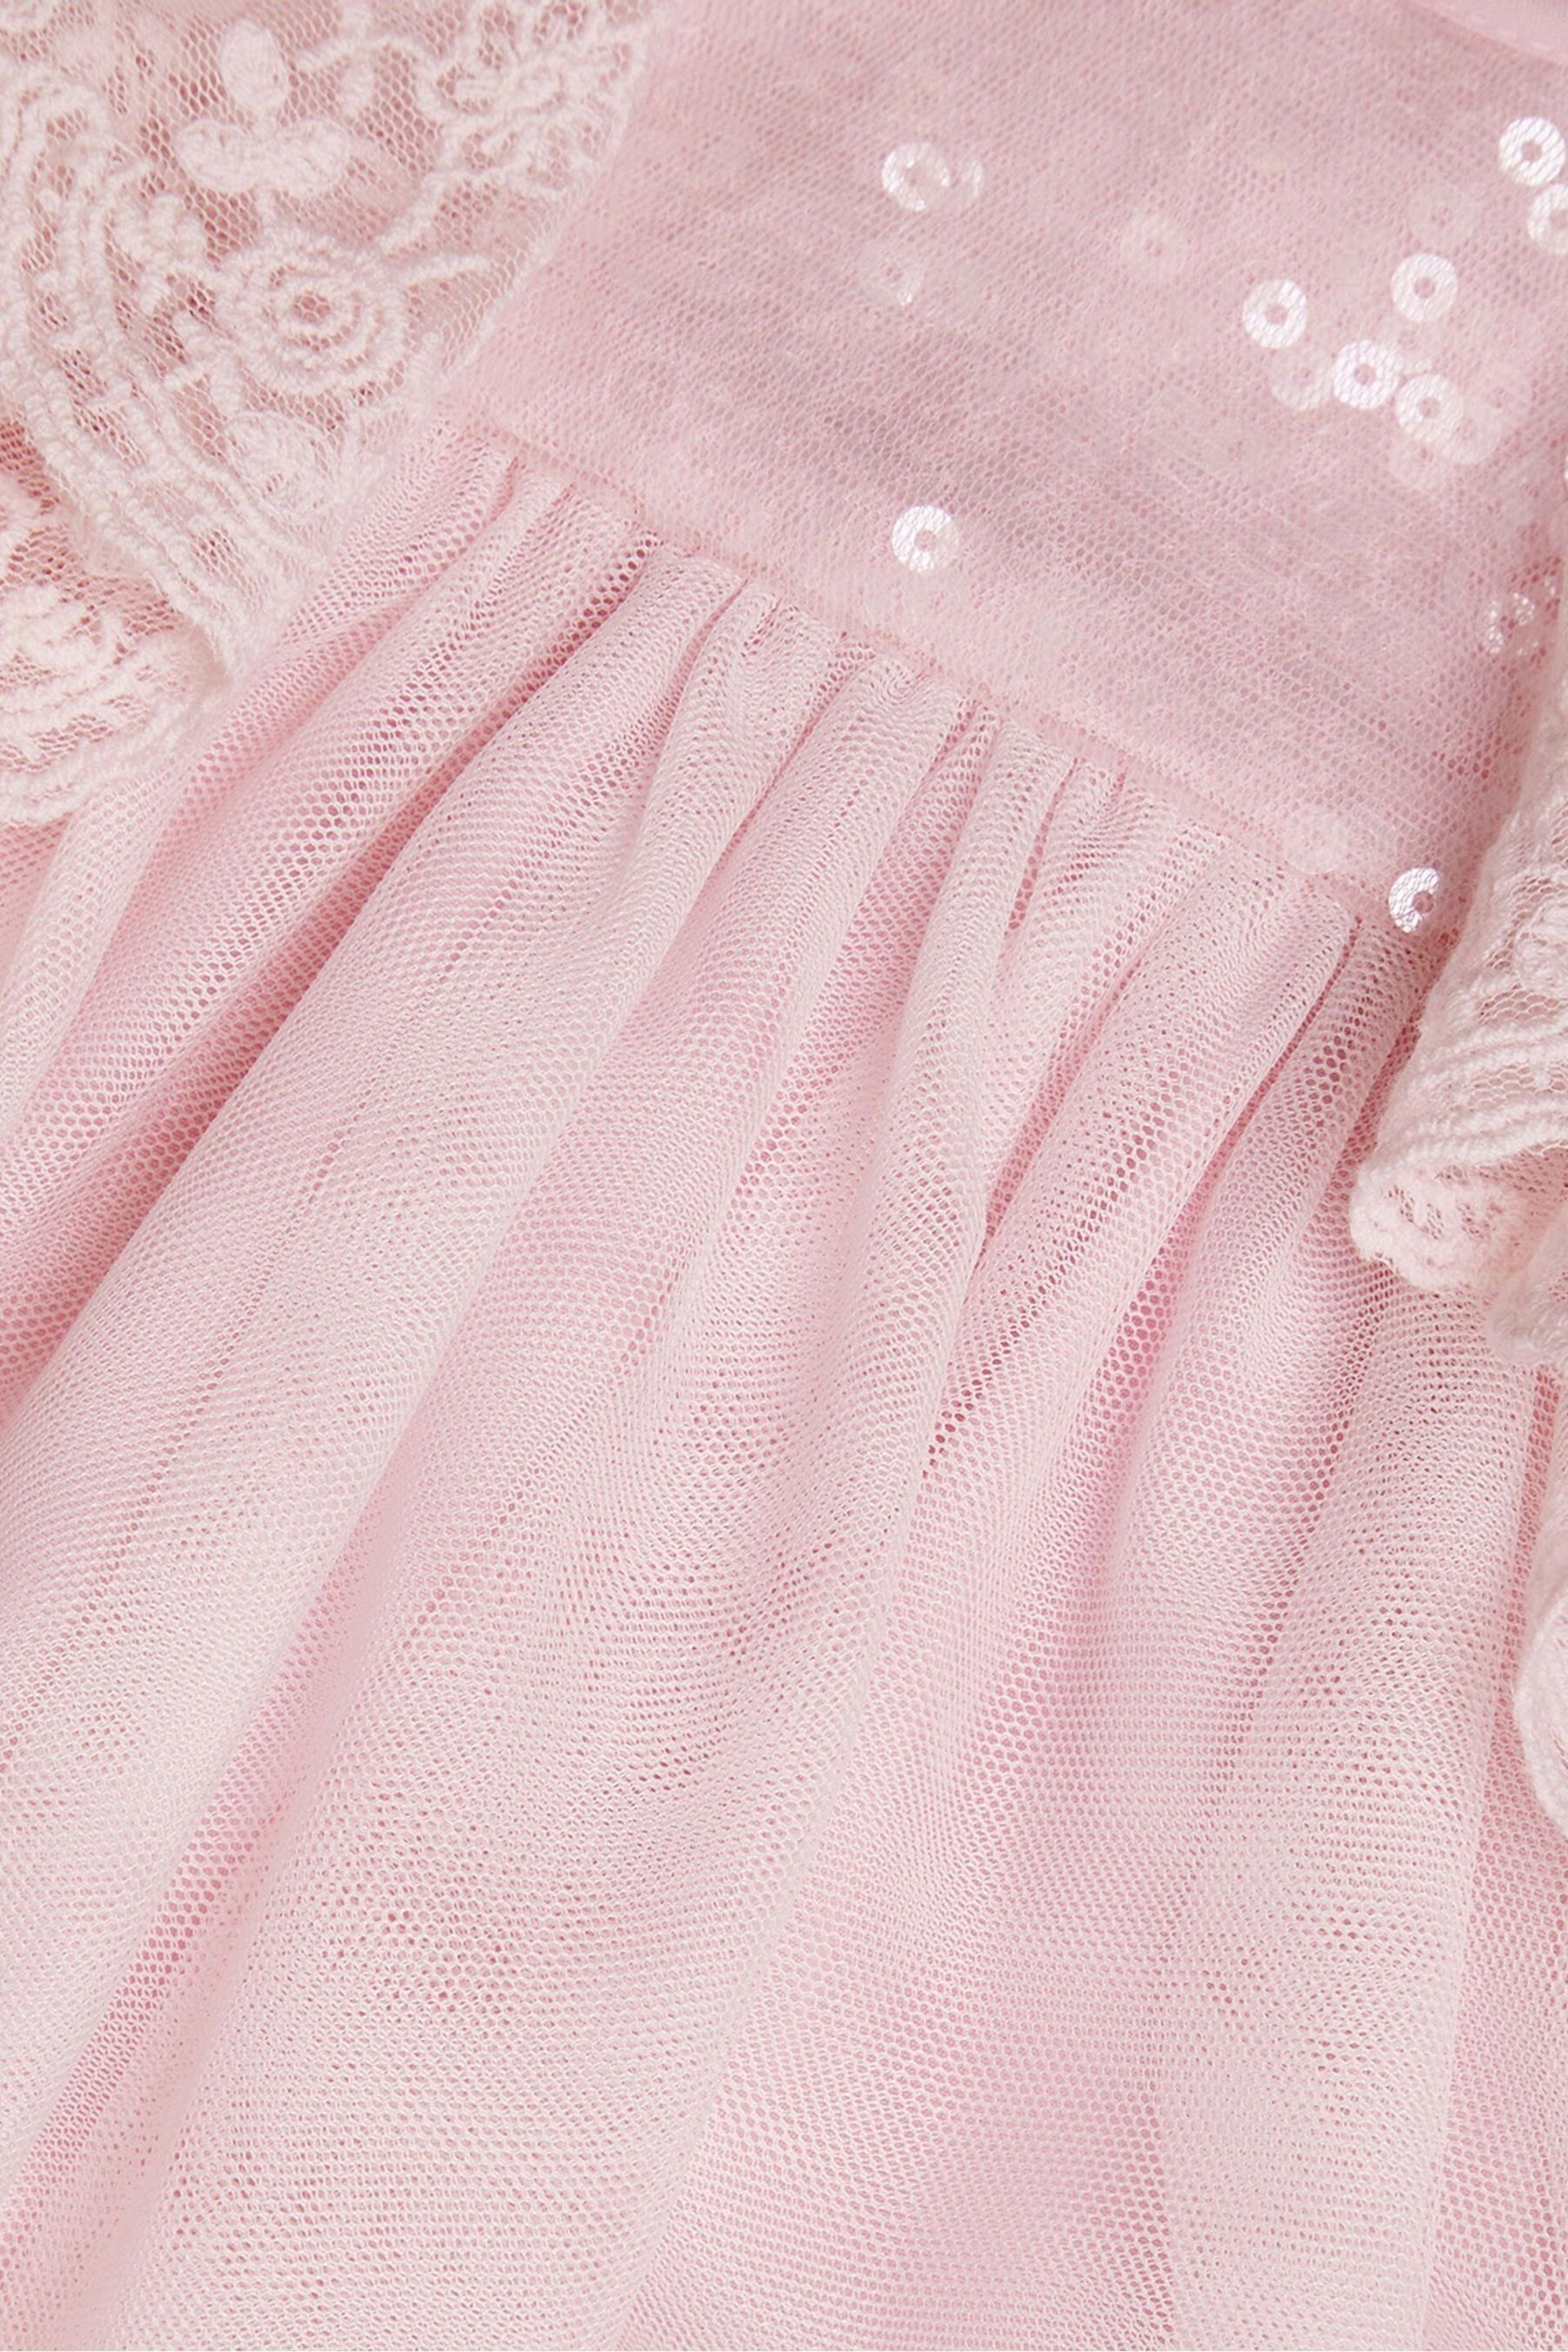 Monsoon Pink Baby Charlotte Frill Dress - Image 4 of 4